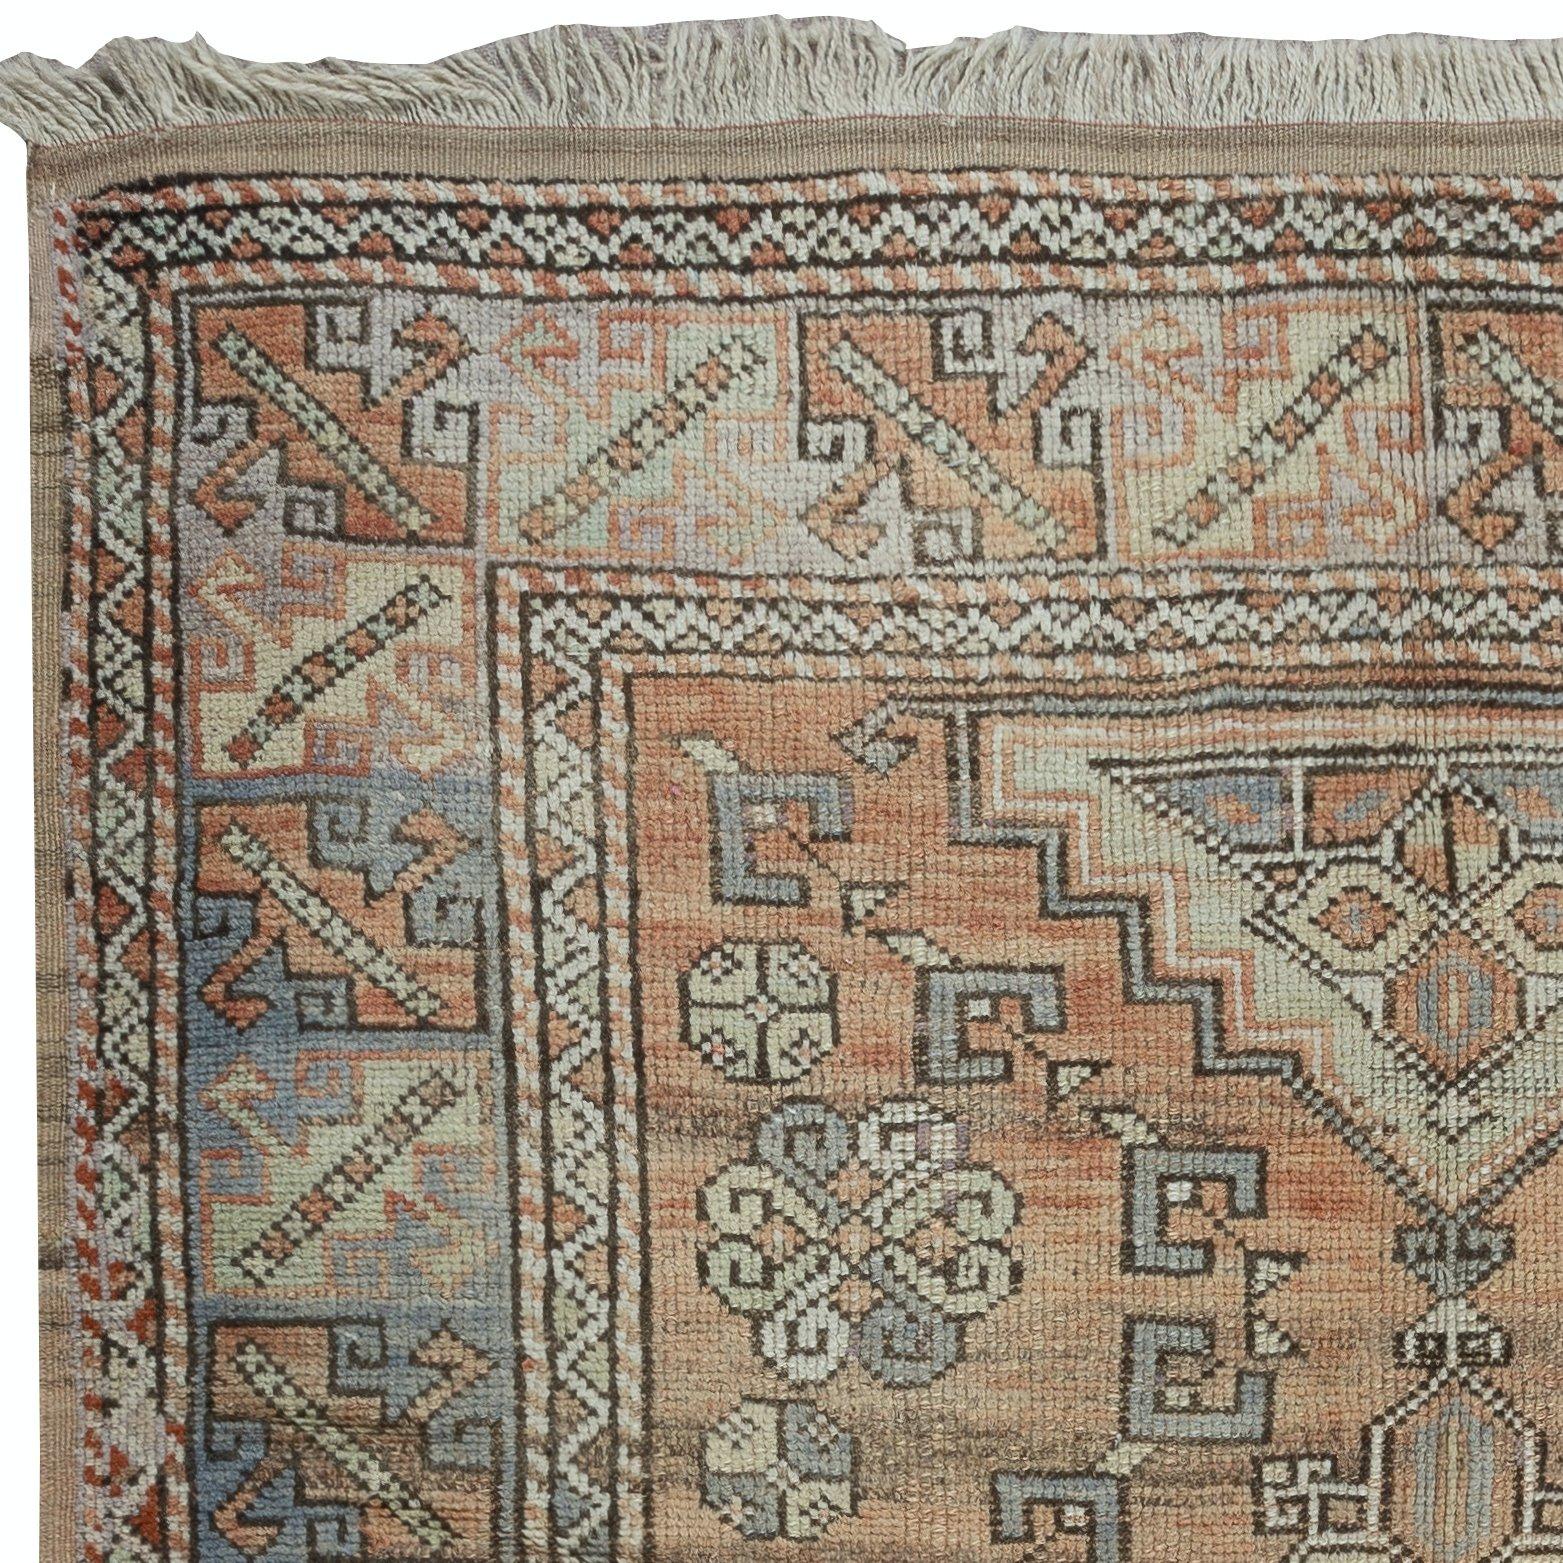 Turkish 4.8x6 Ft Vintage Handmade Anatolian Wool Area Rug with Geometric Design For Sale